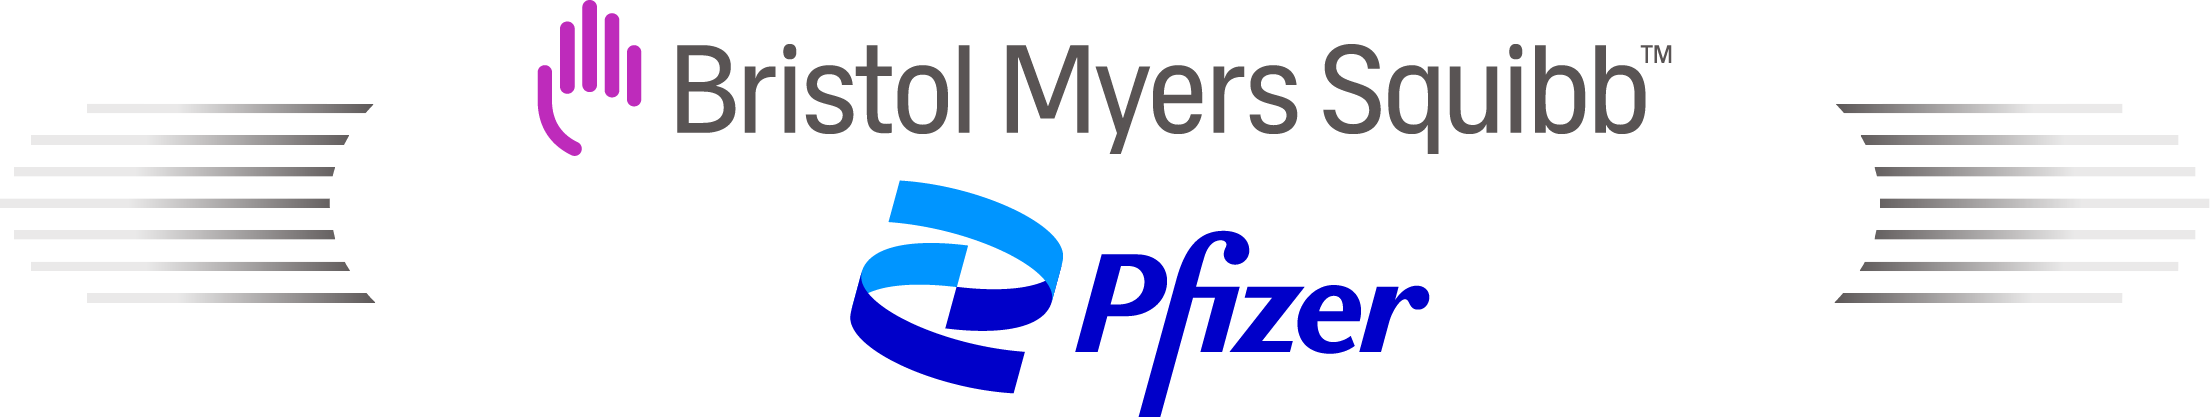 BMS-Pfizer Alliance Logo (Stacked)